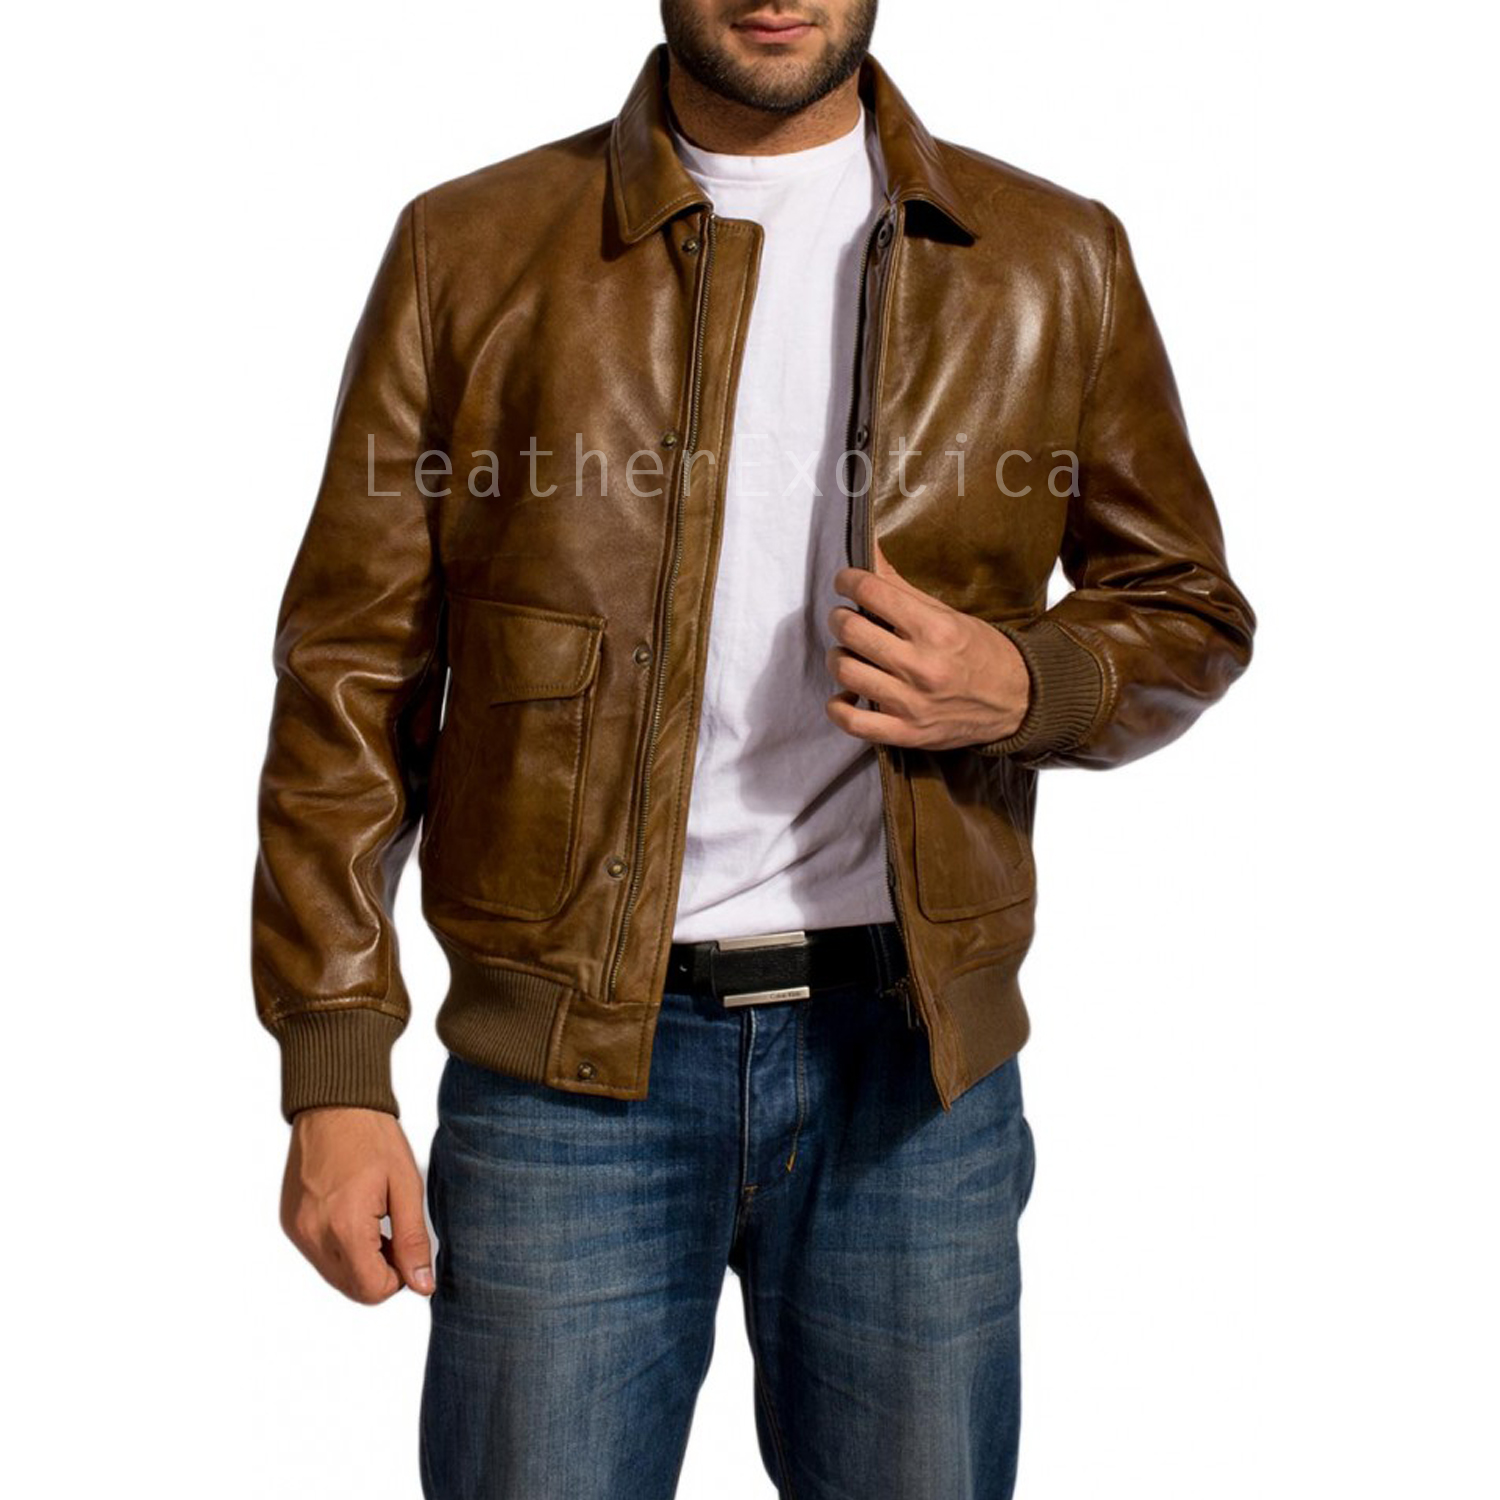 Ansel Elgort Leather Bomber Jacket